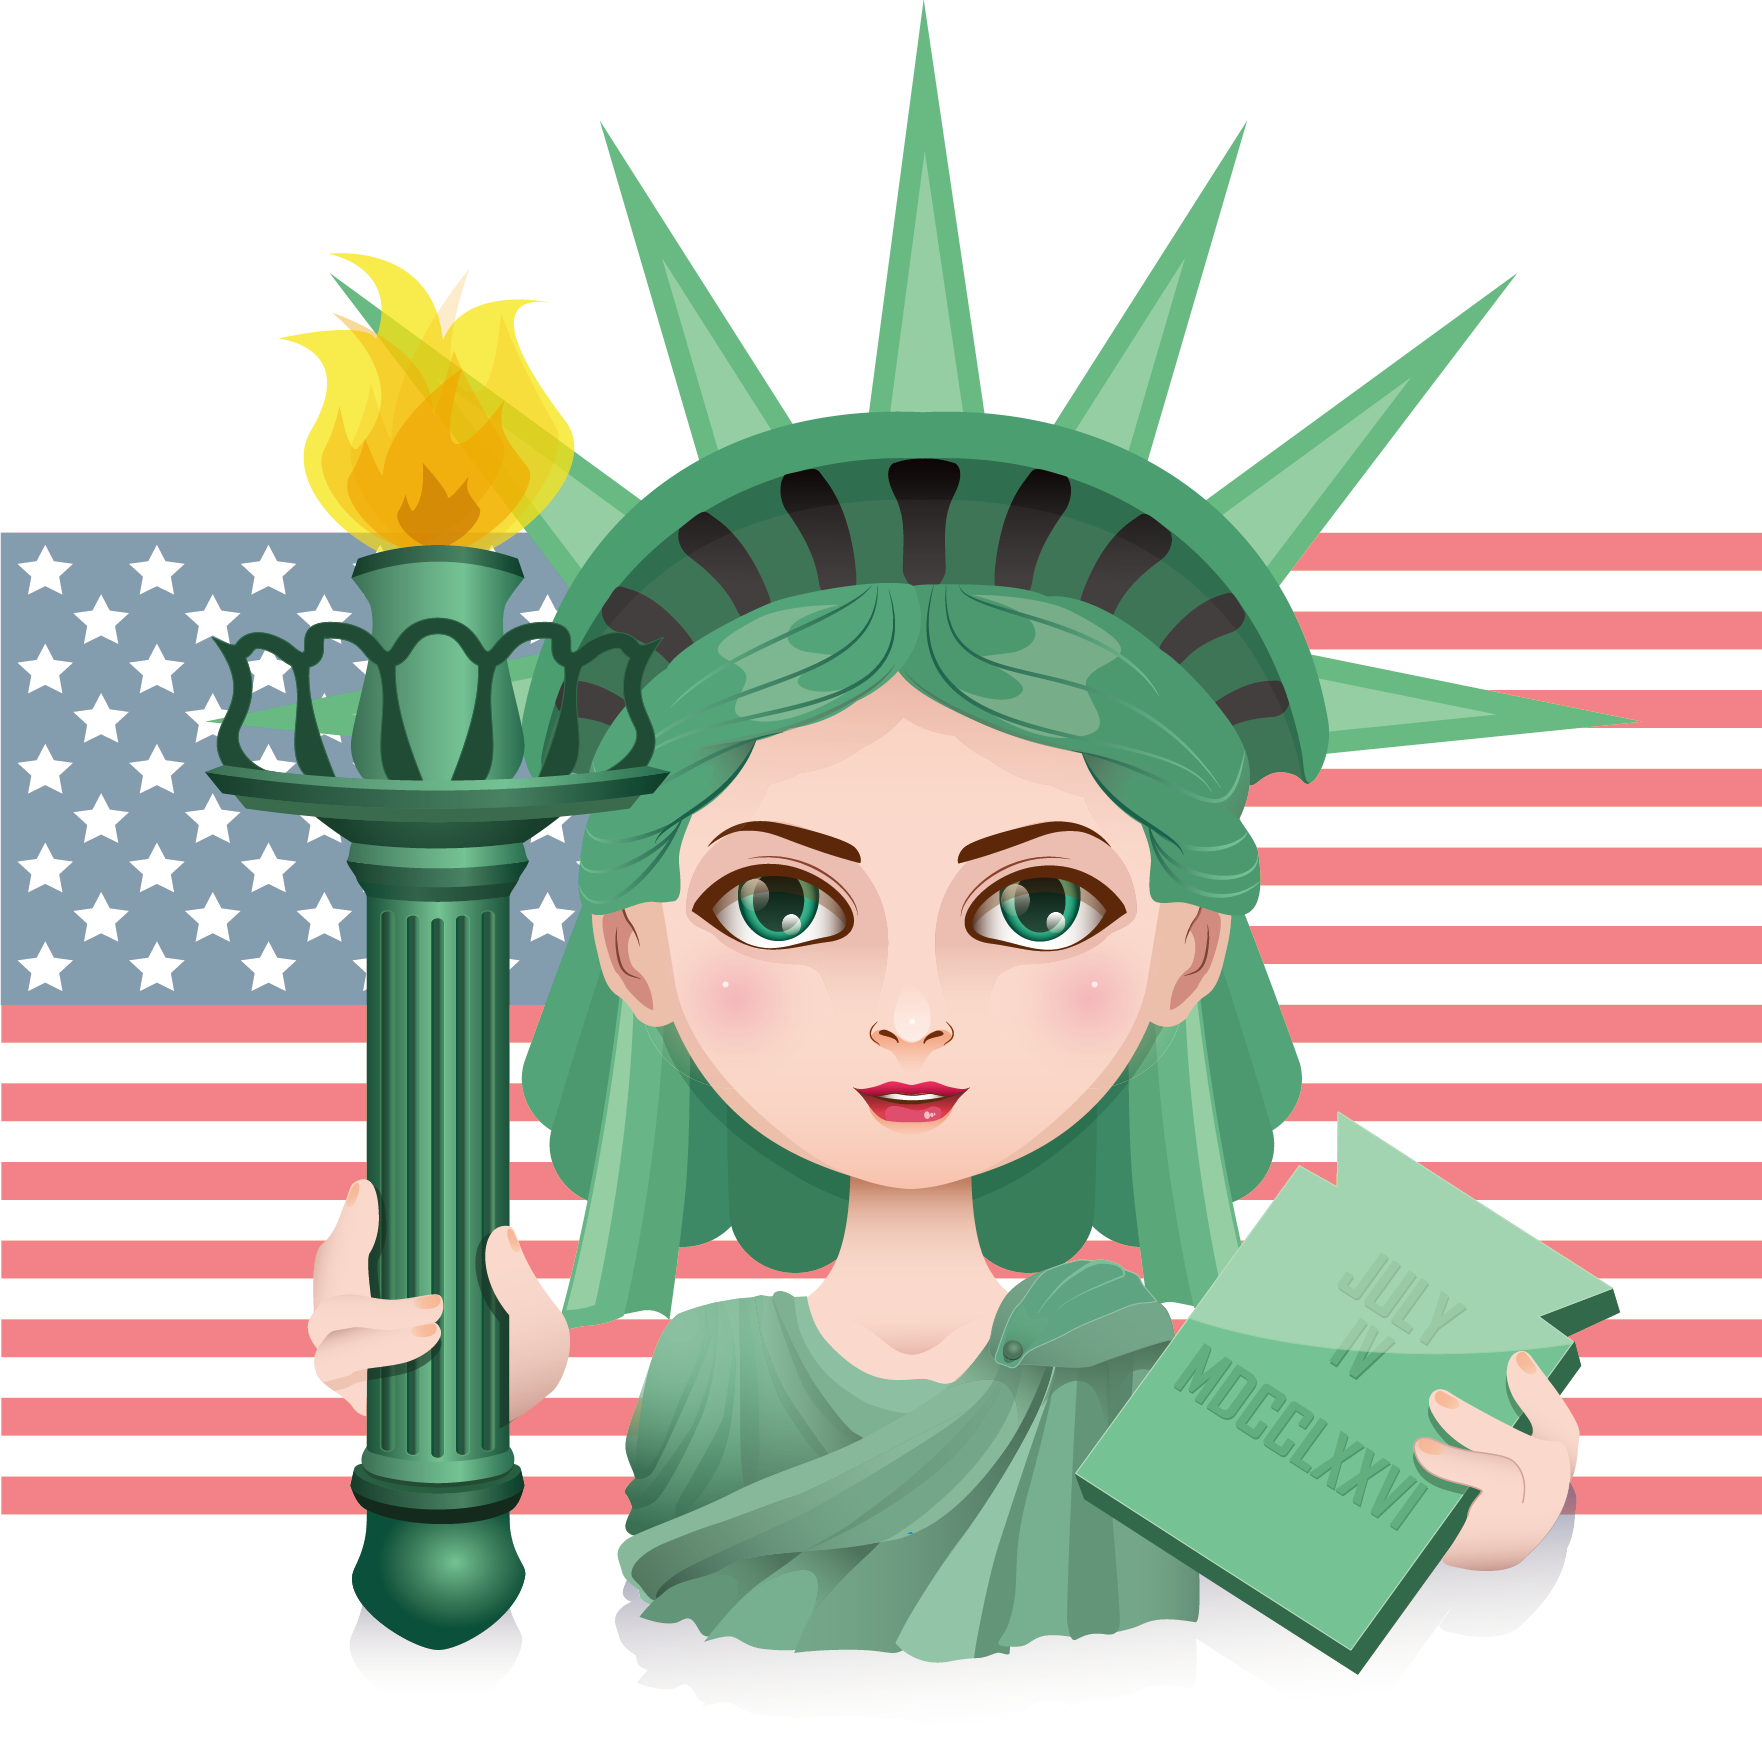 Lady freedom lady liberty. Статуя свободы Нью-Йорк. Статуя свободы вектор. Статуя свободы арт. Статуя свободы мультяшная.